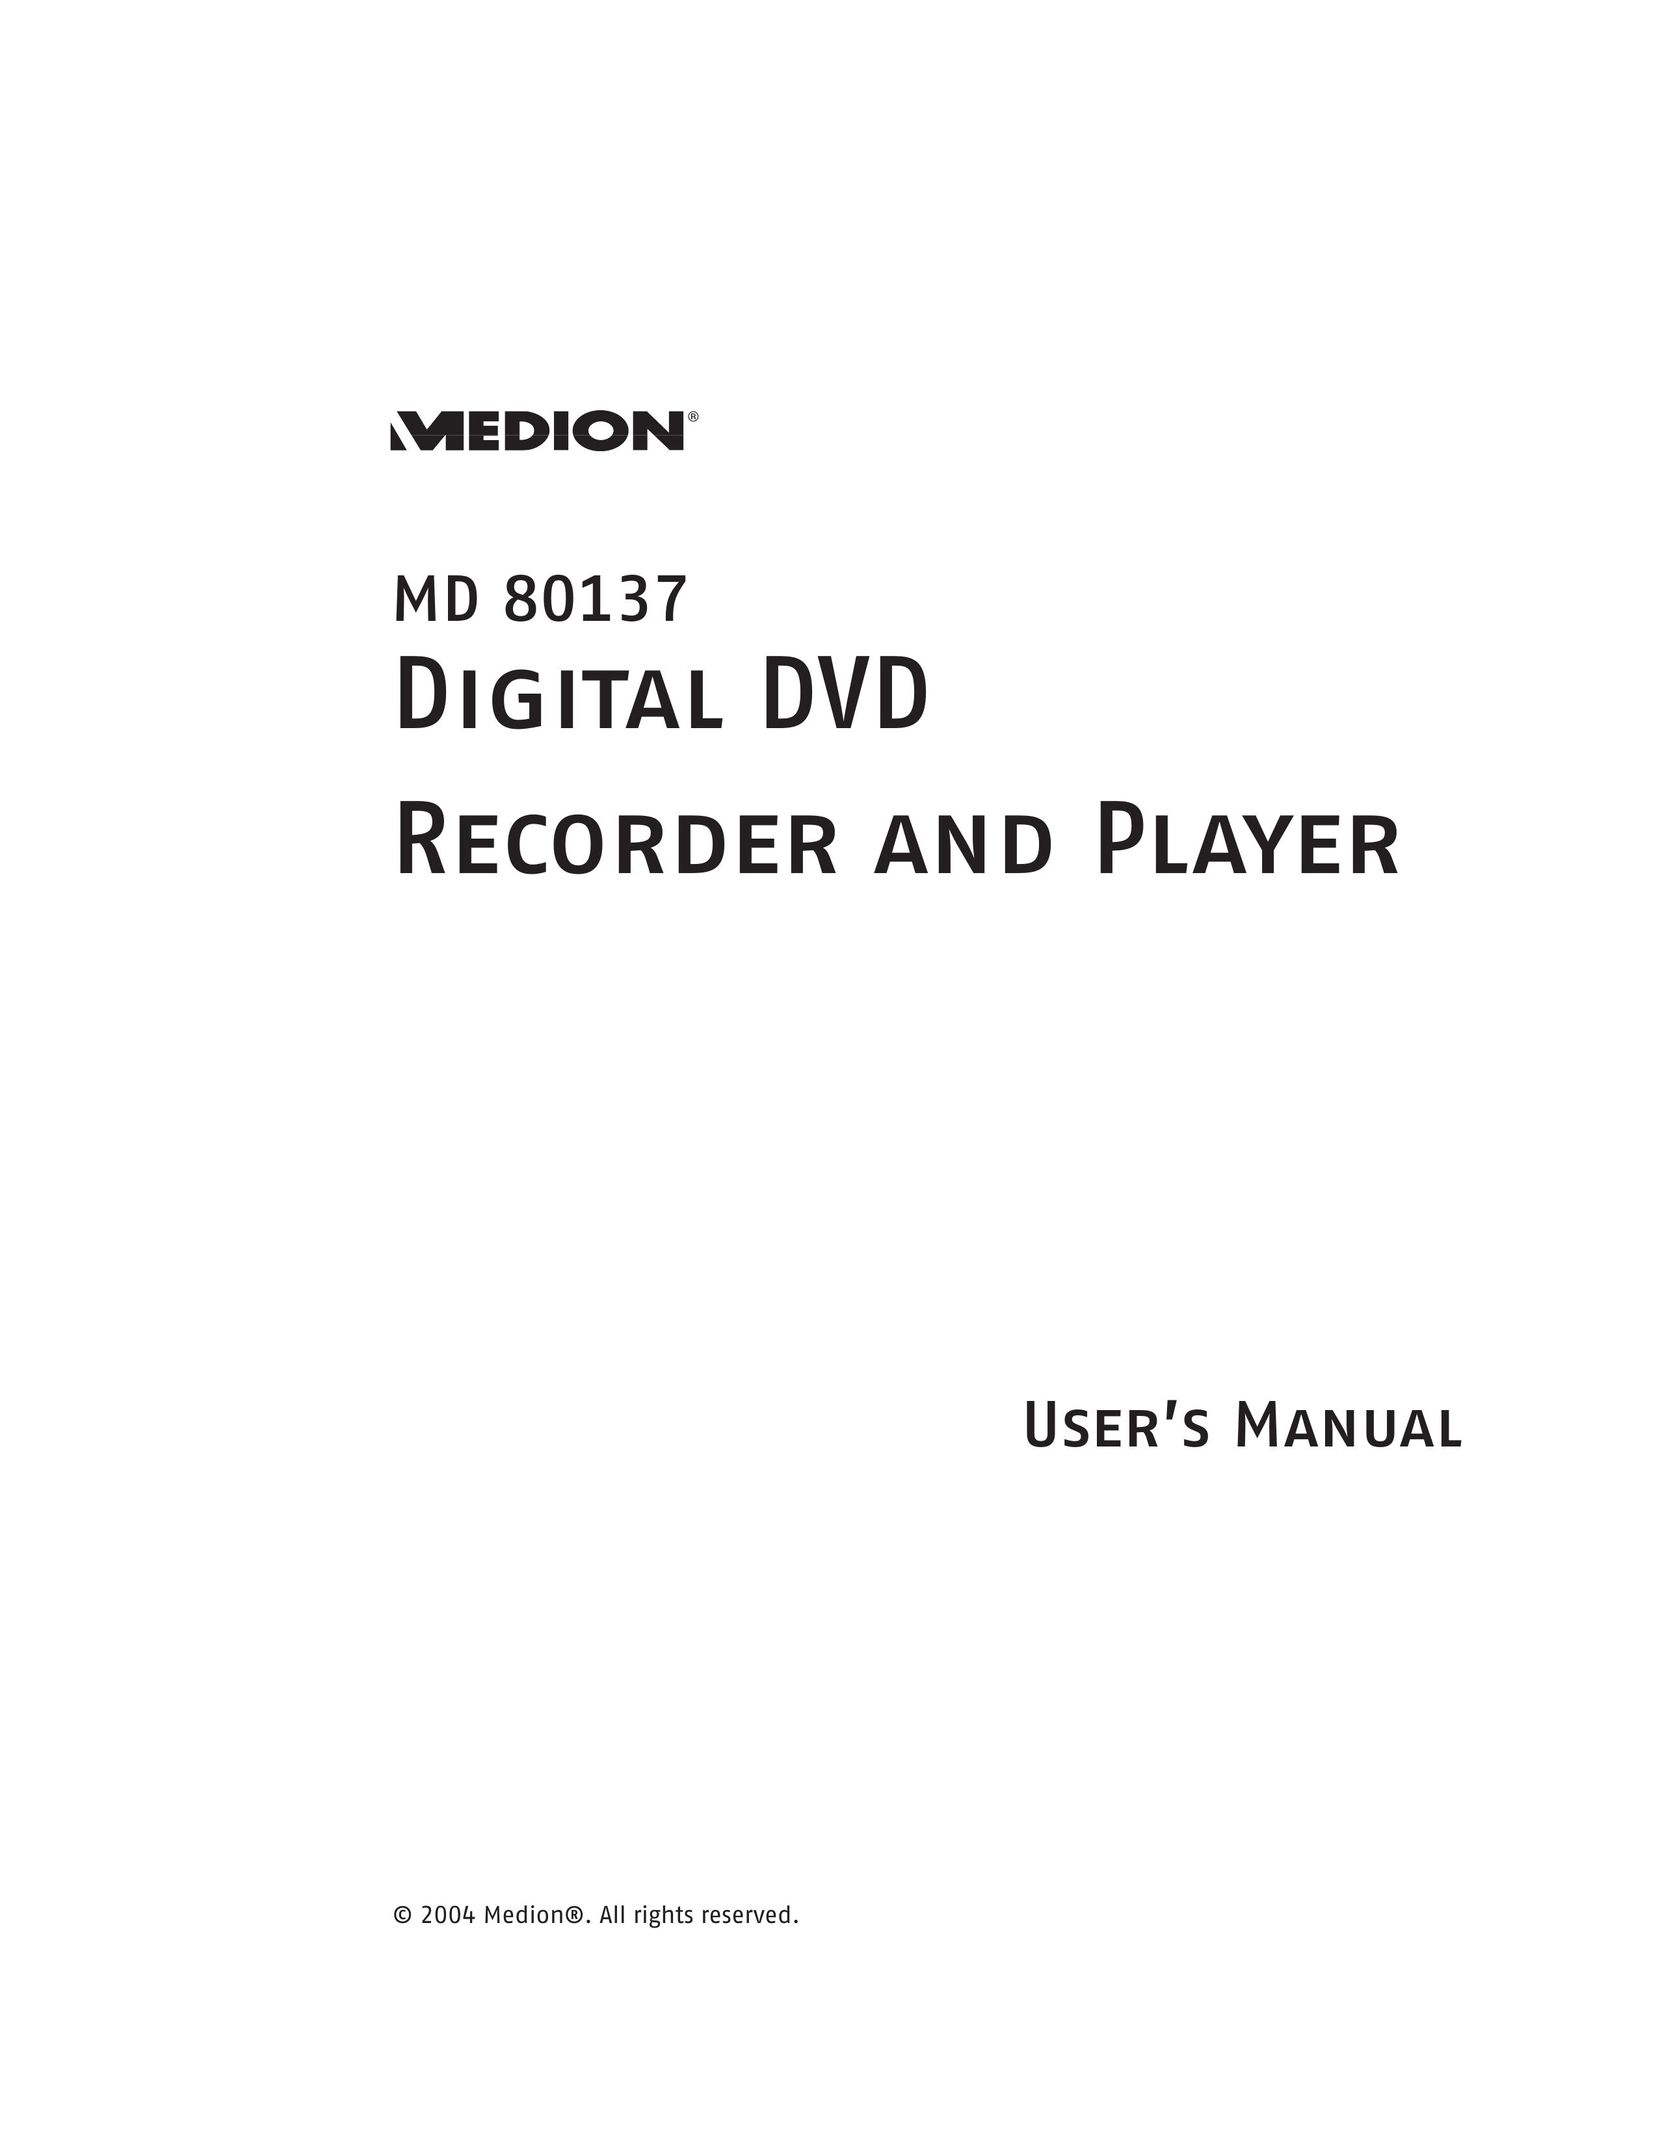 Medion MD 80137 DVD Recorder User Manual